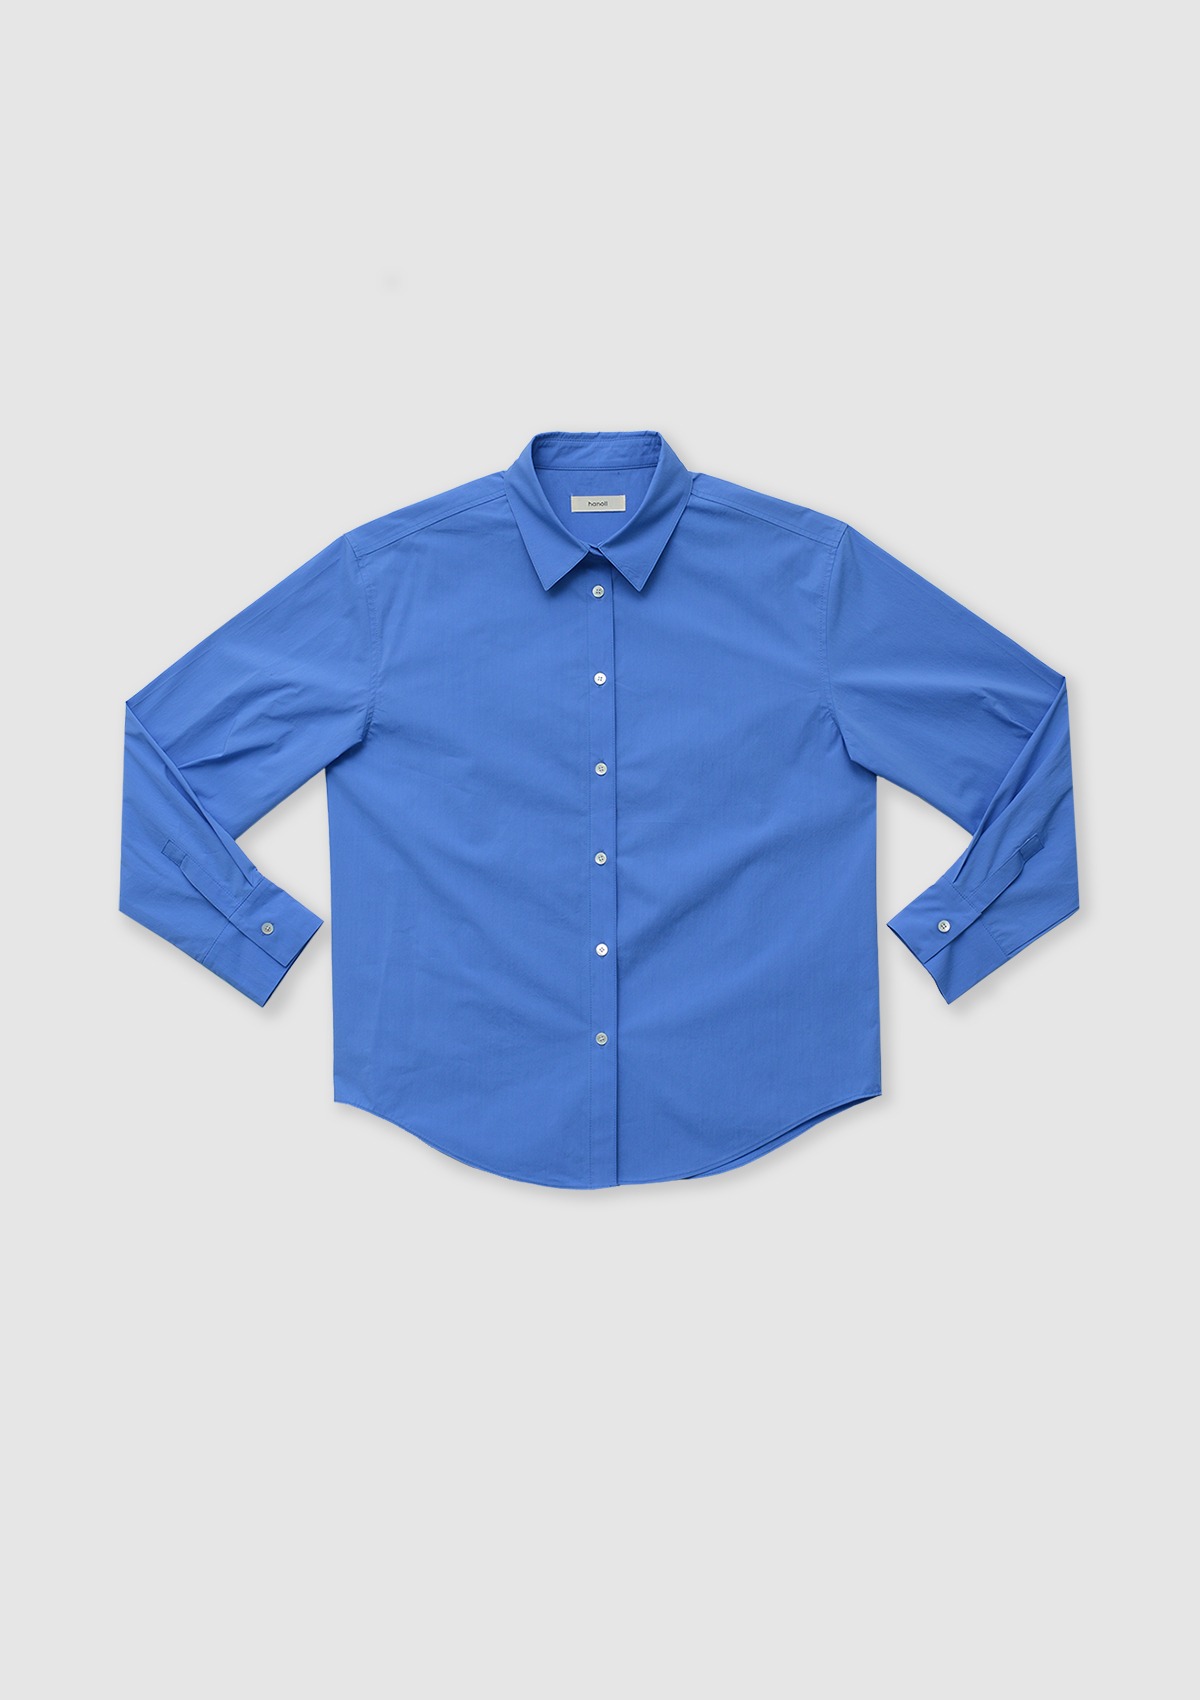 Signature Shirt (Blue)